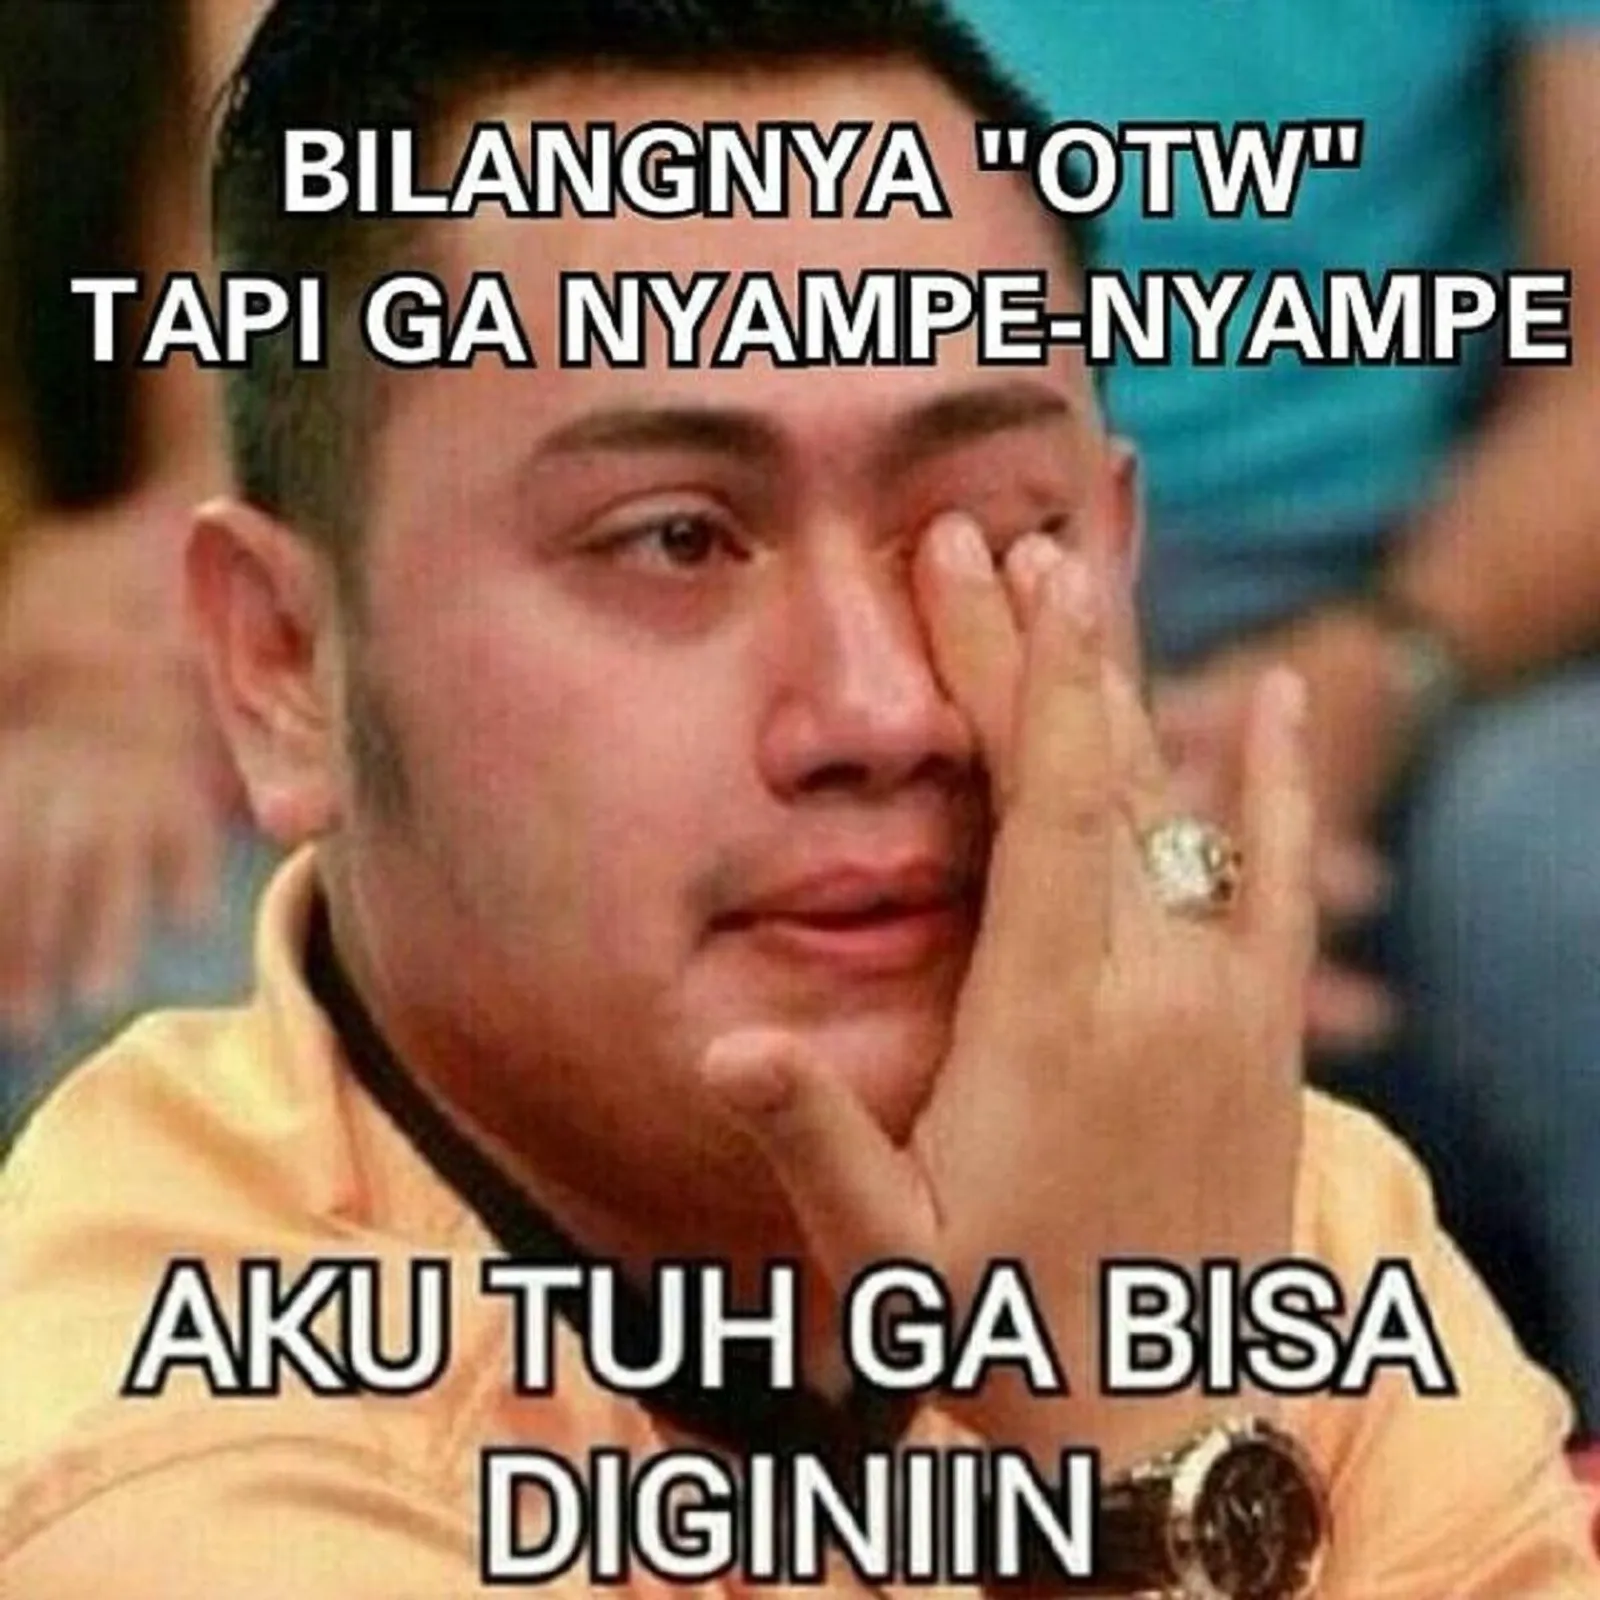 10 Meme OTW a la Orang Indonesia Ini Lucu Banget Tapi Juga Bikin Emosi